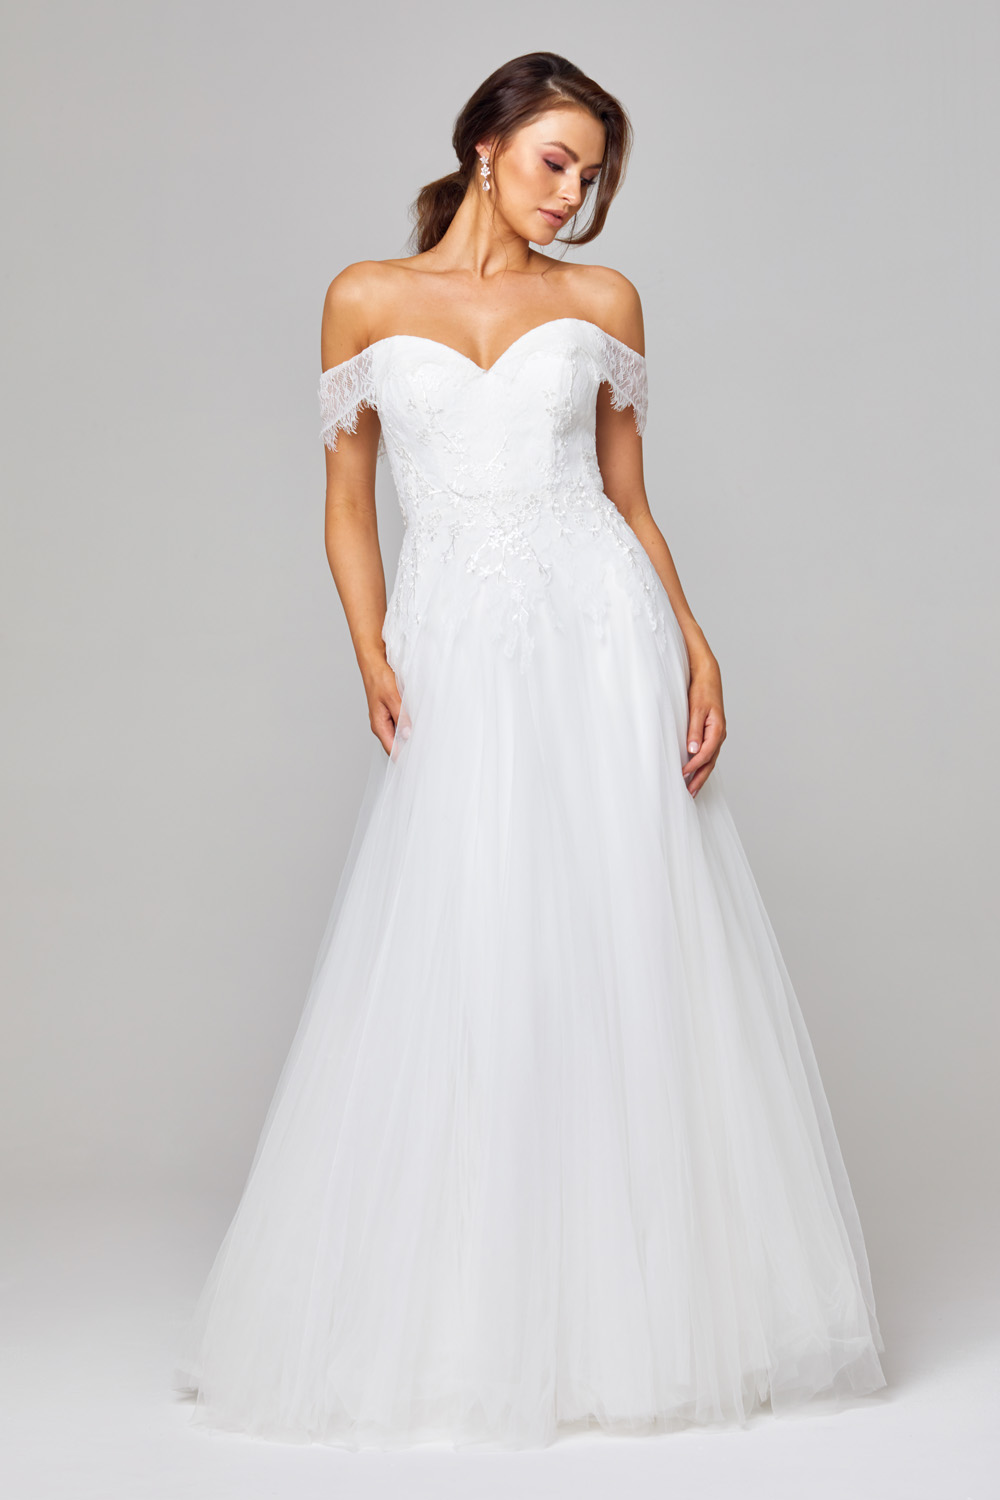 KIISHA TC313 Wedding Dresses dress by Tania Olsen Designs